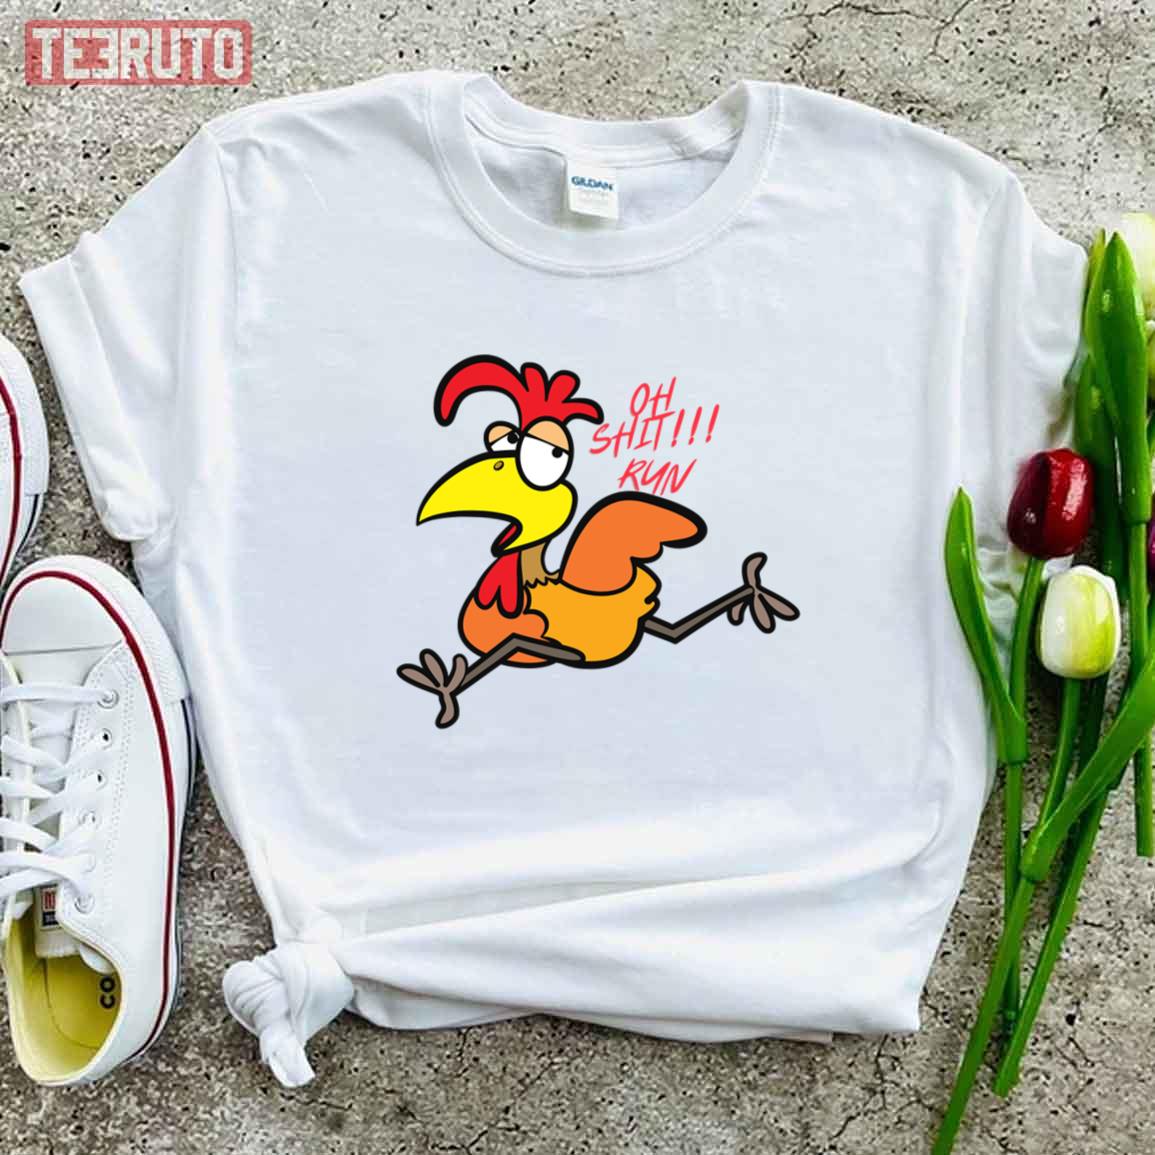 Oh Shit Run Running Chicken Meme Unisex T-Shirt